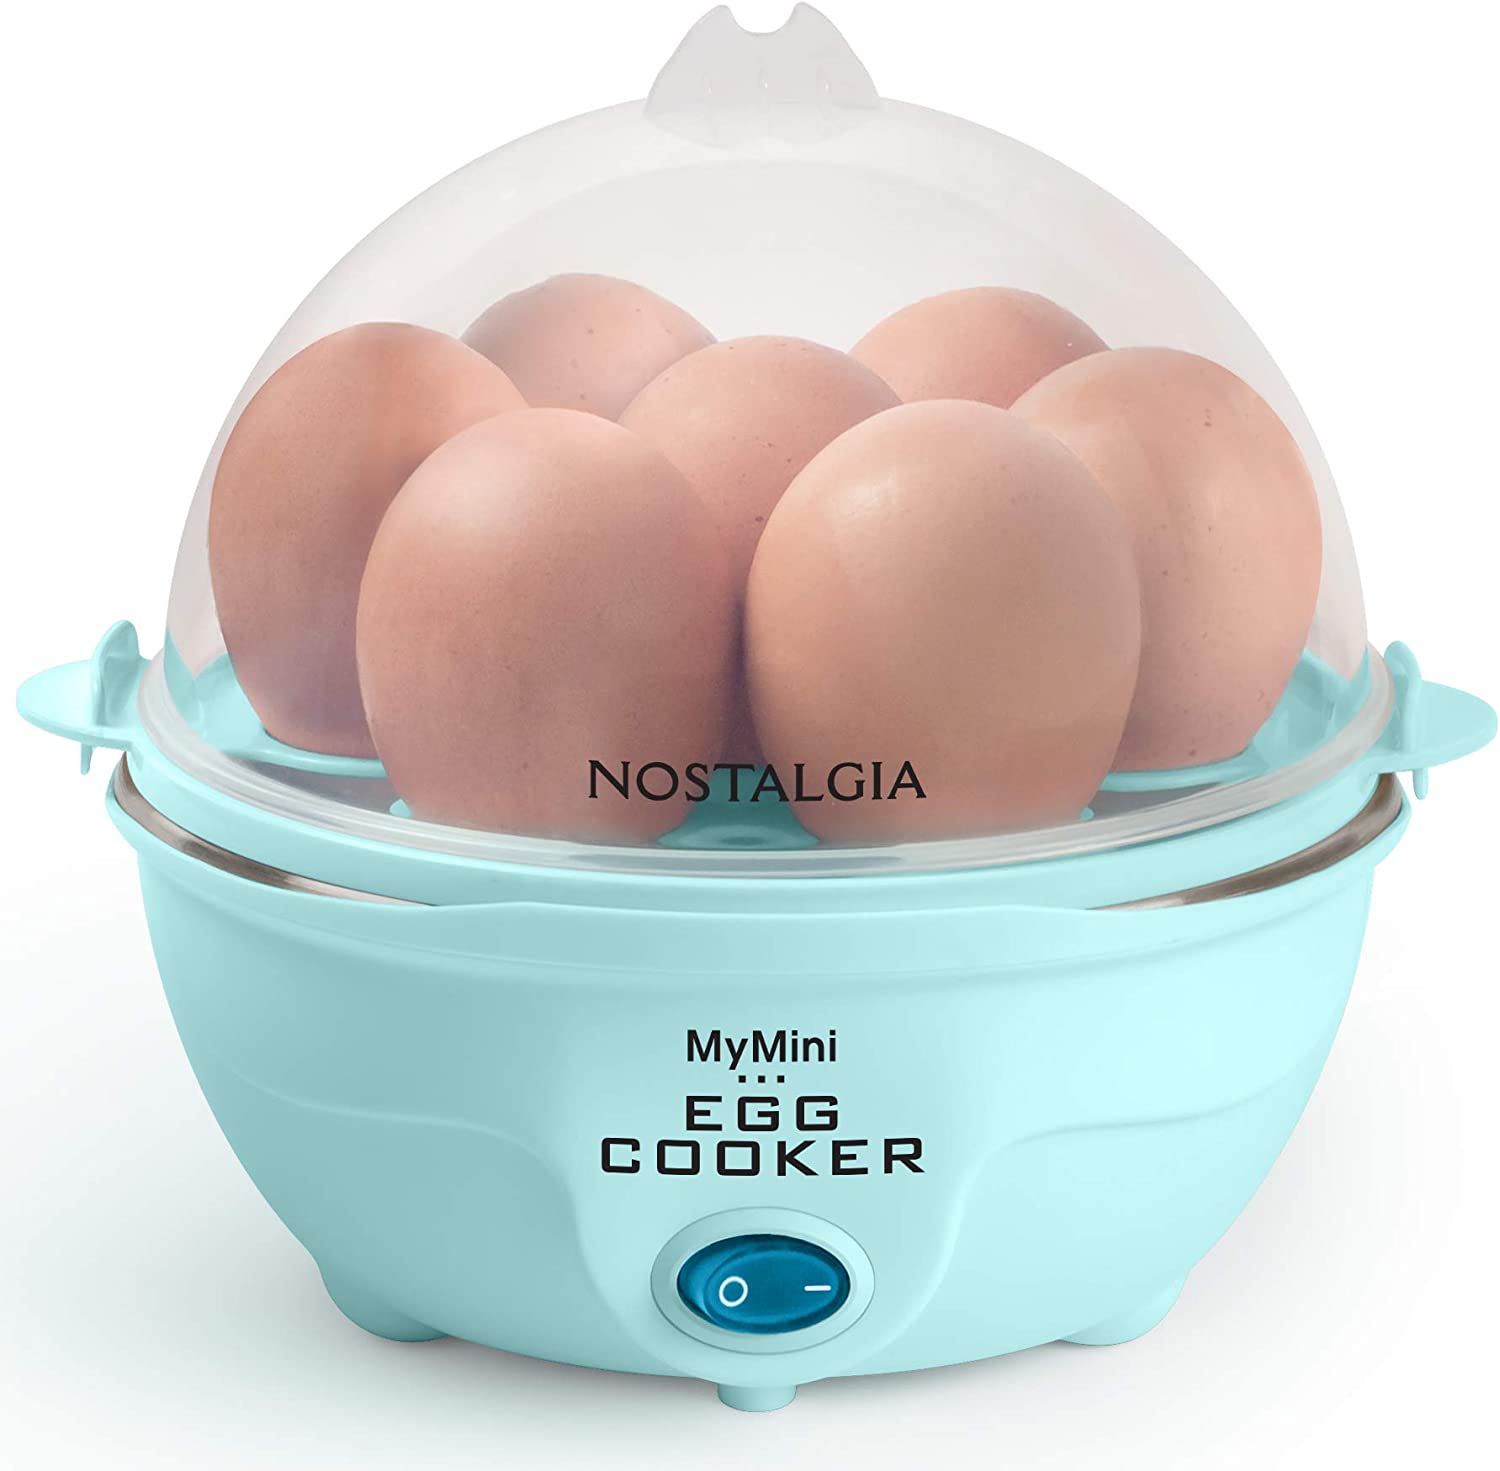 Presto Easy Store Electric 6 Egg Cooker - 04632